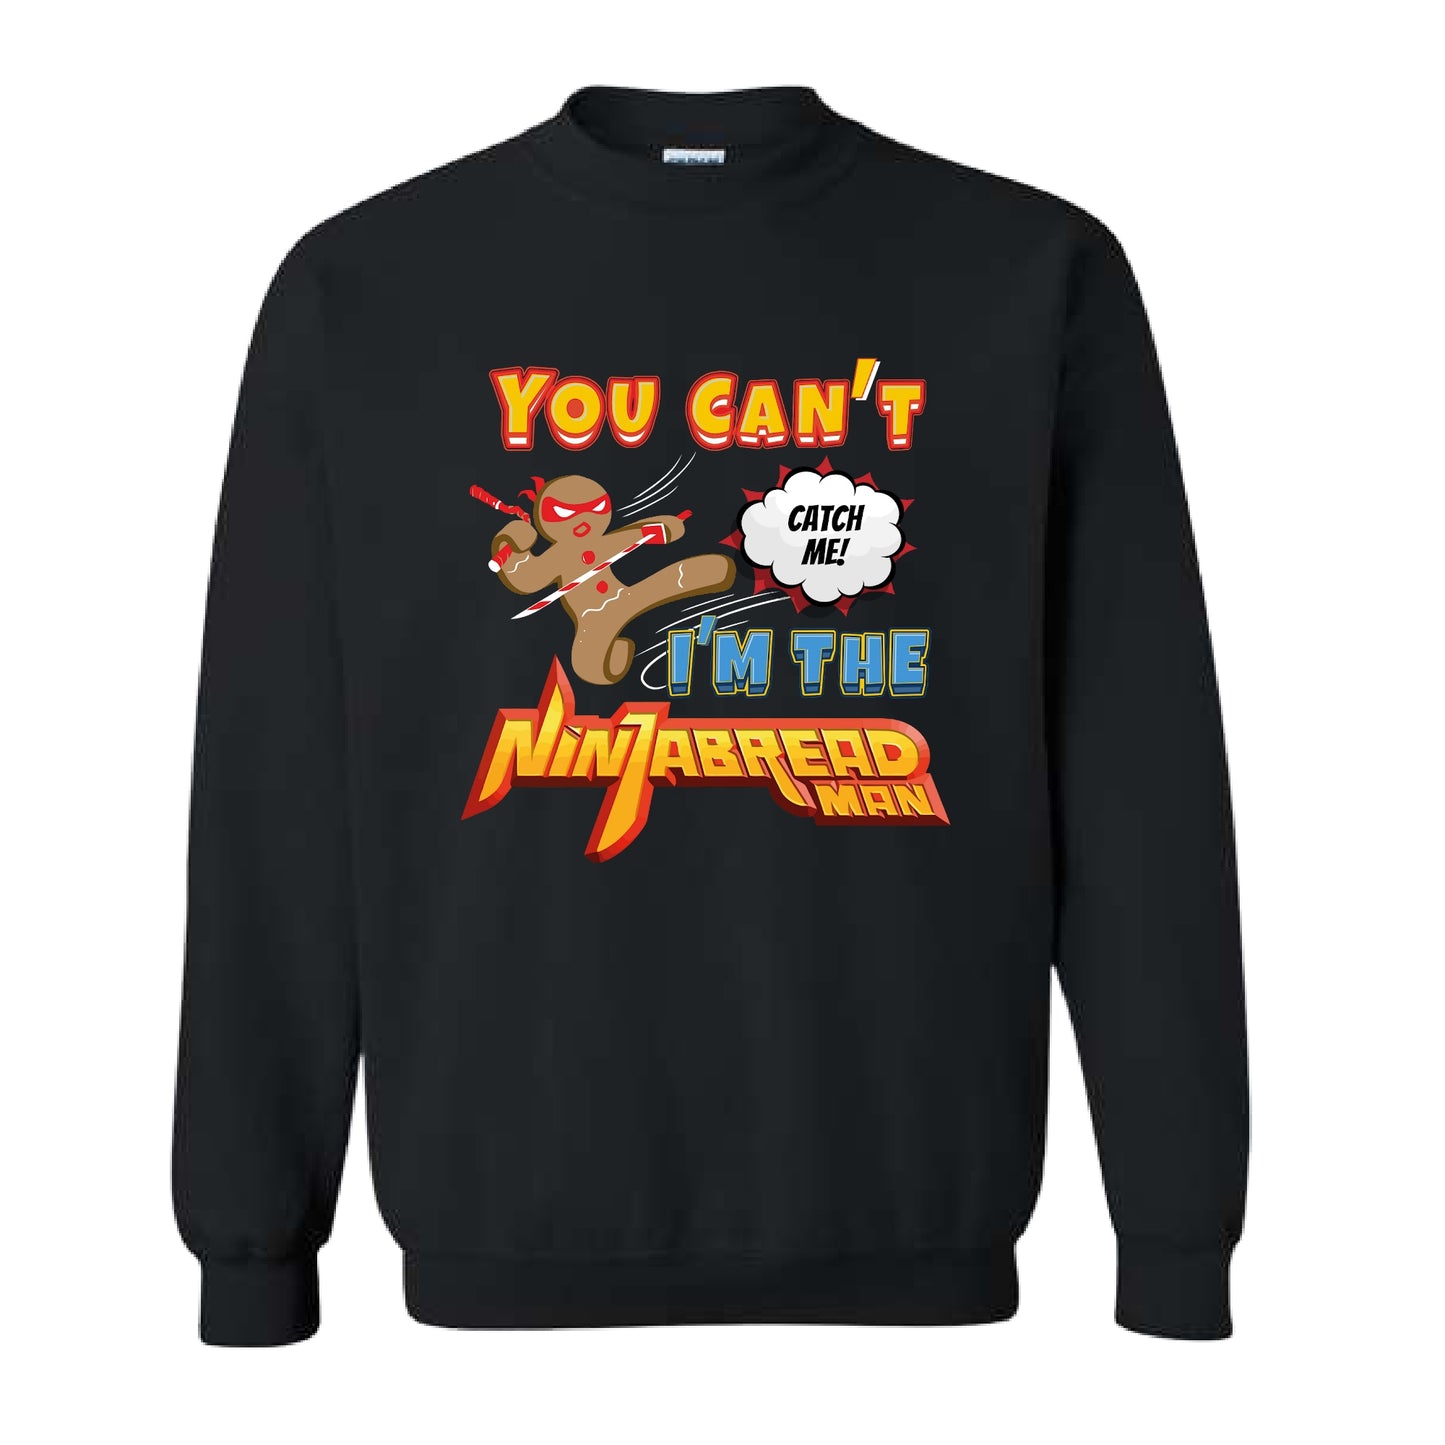 Ninjabread Man Shirt